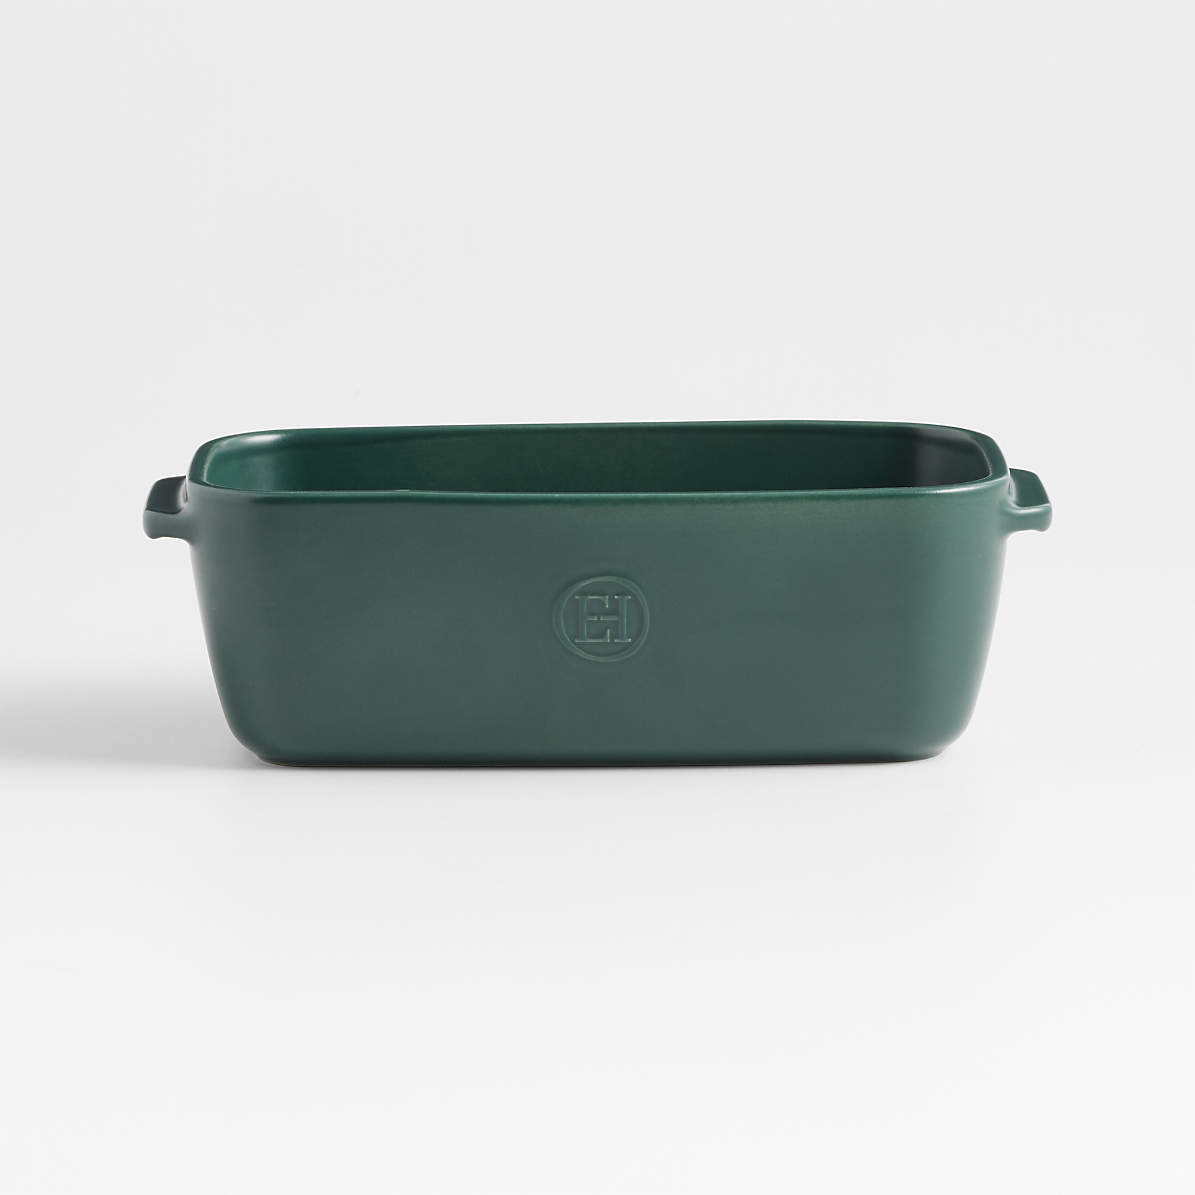 Emile Henry x Crate & Barrel 2-Piece Green Ceramic Baking Dish Set